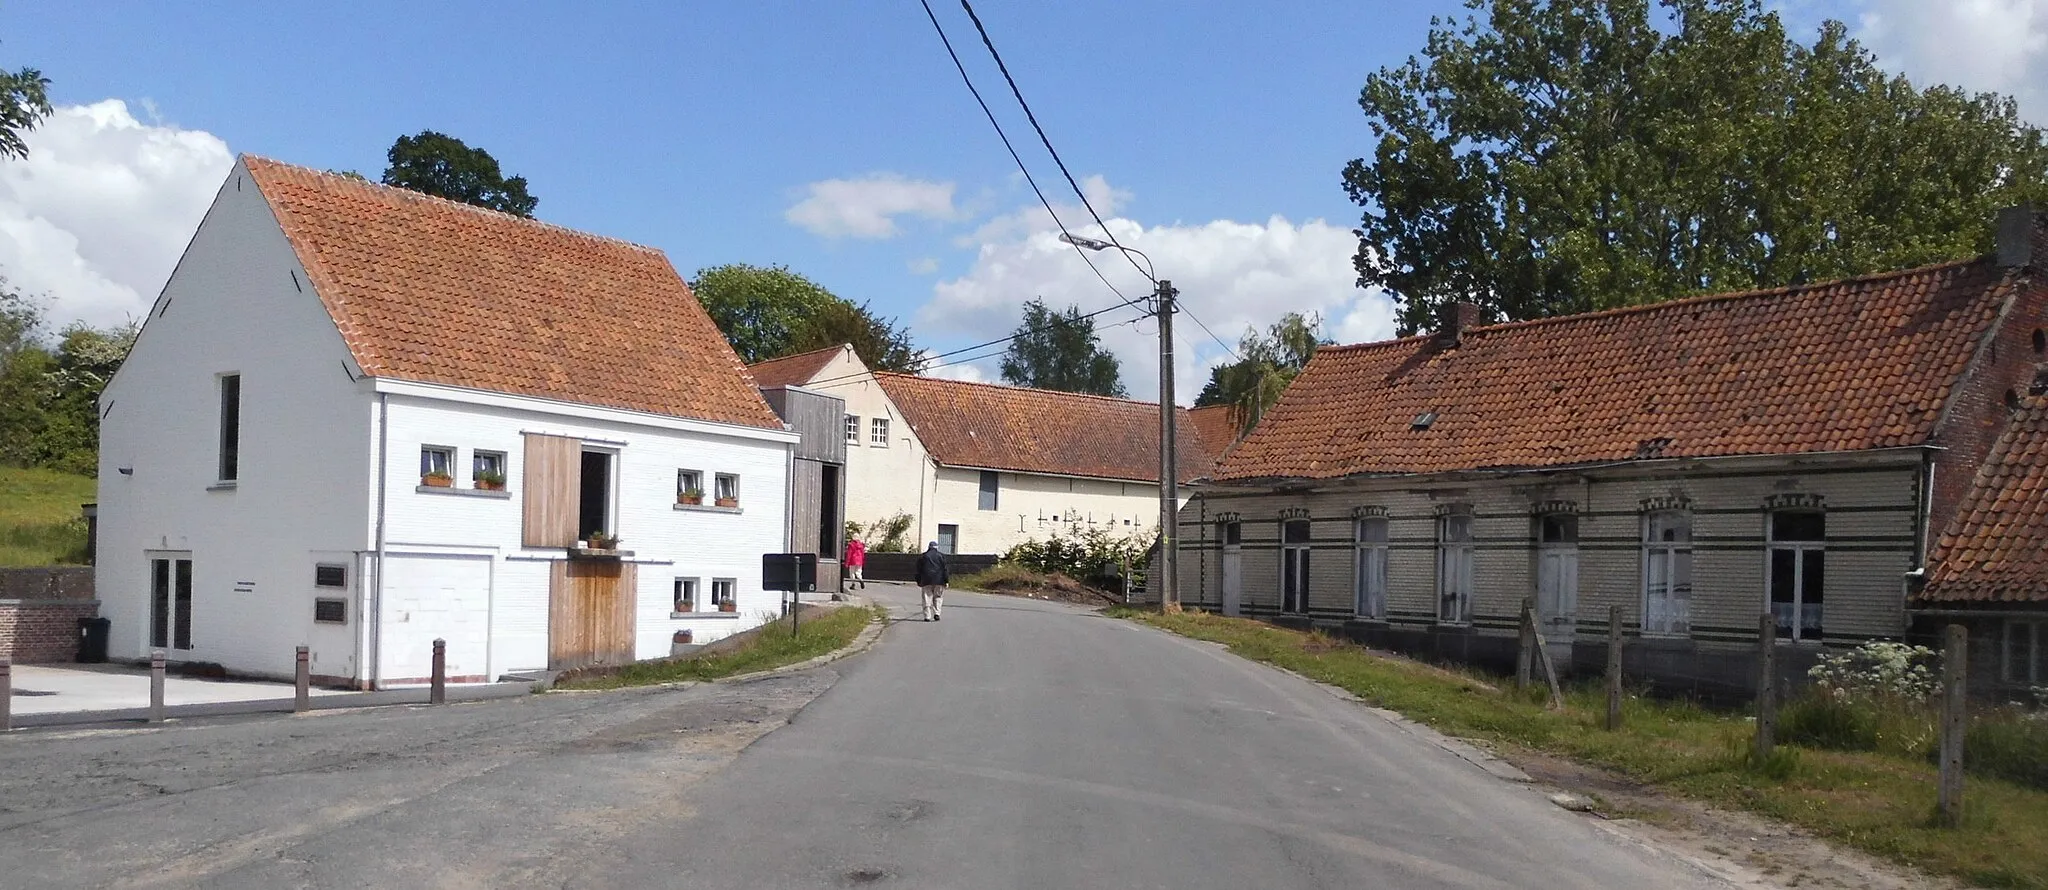 Photo showing: Voorgevel van de voormalige molenaarswoning - Boembeke - Michelbeke - Brakel - Oost-Vlaanderen - België